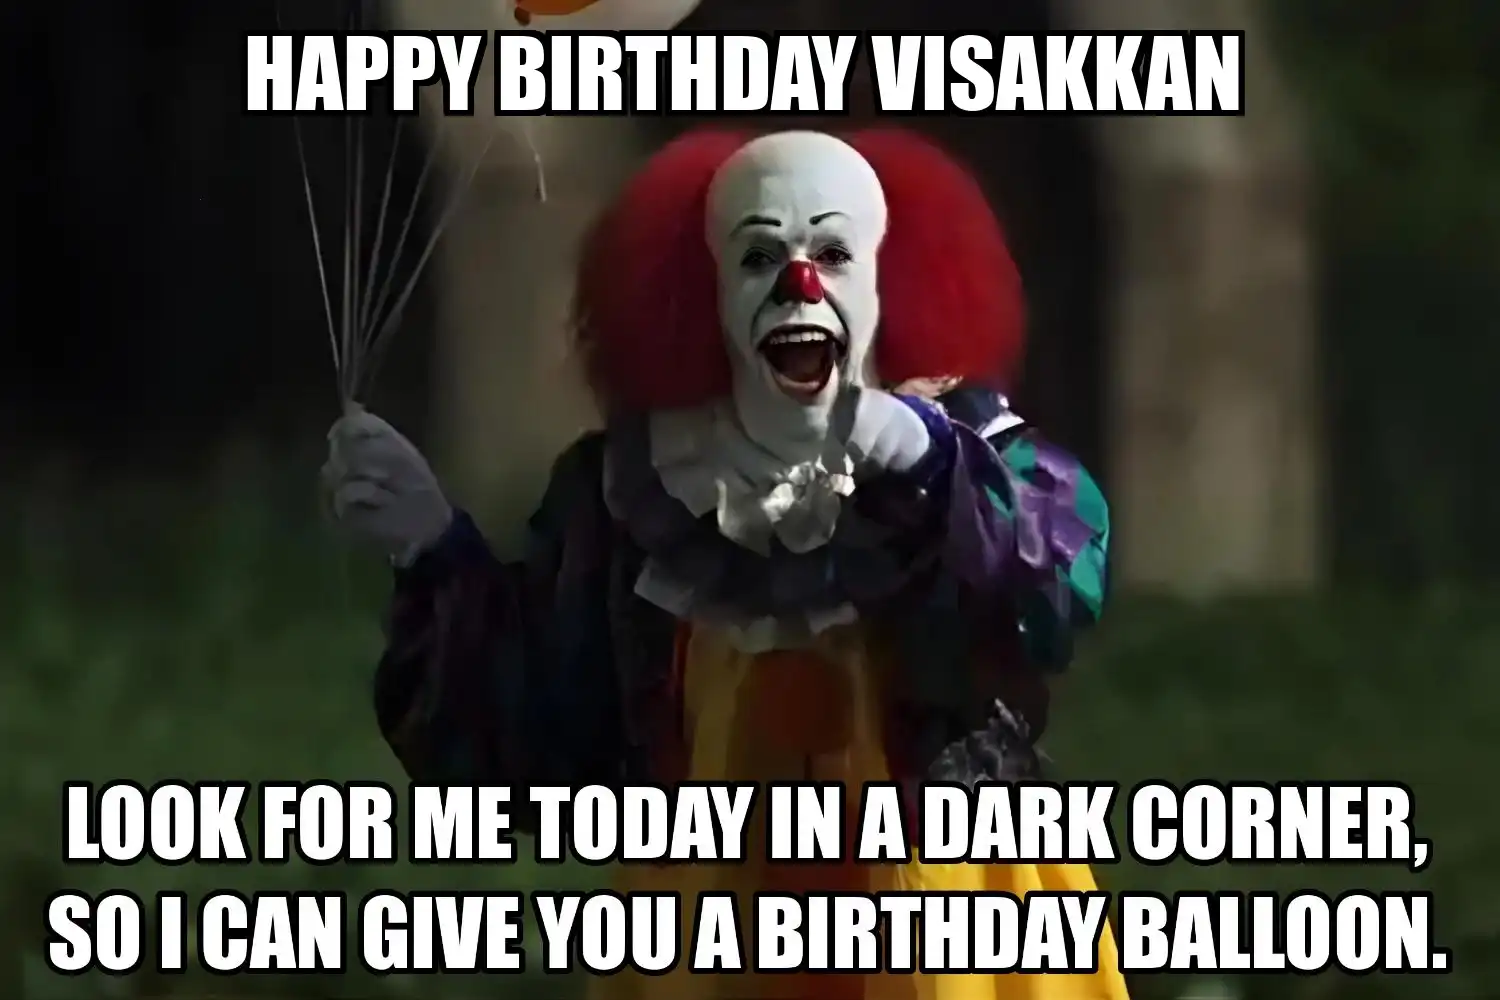 Happy Birthday Visakkan I Can Give You A Balloon Meme